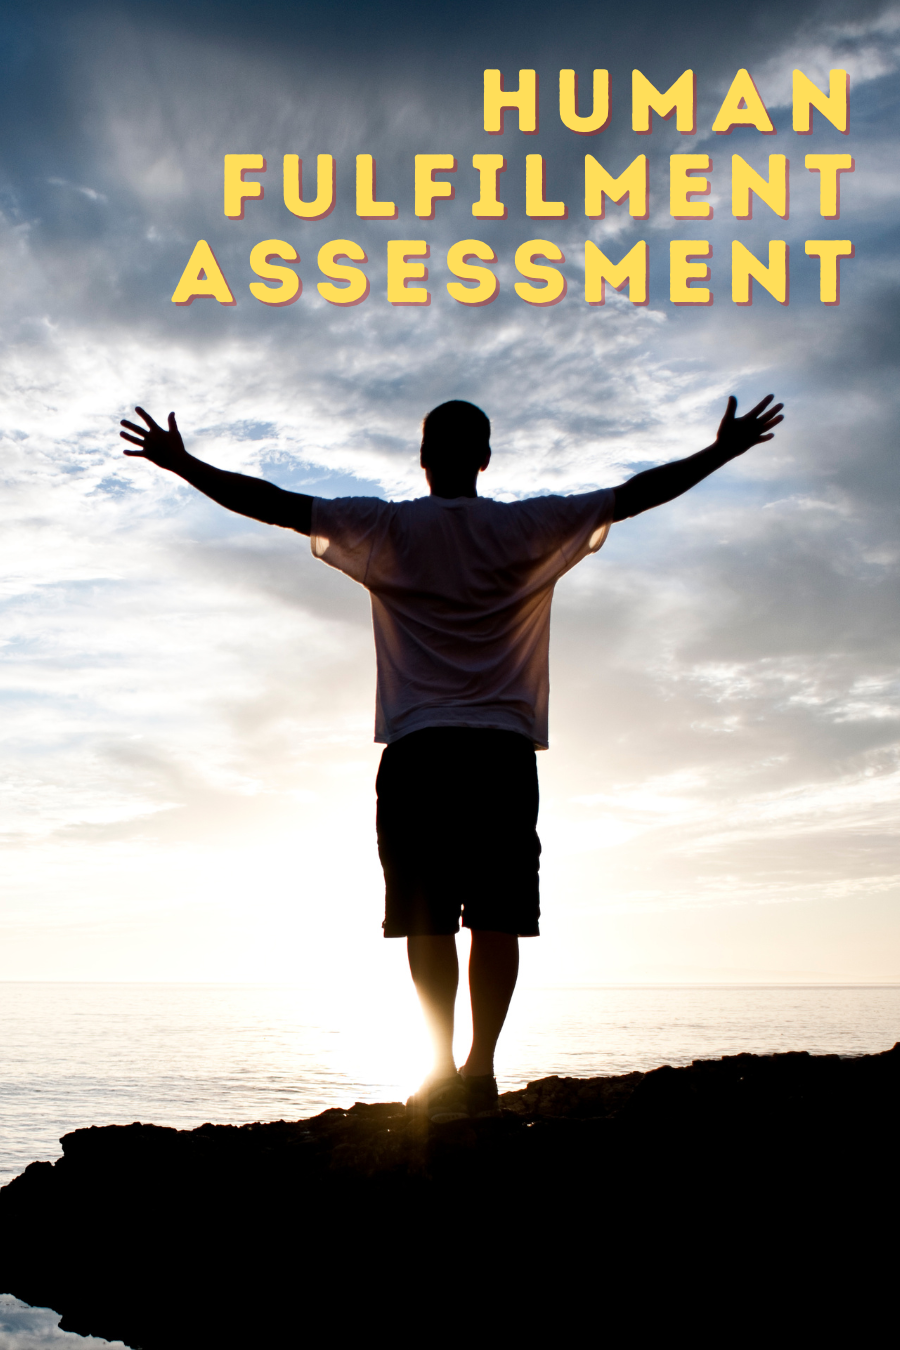 Human Fulfillment Assessment - For Individuals.